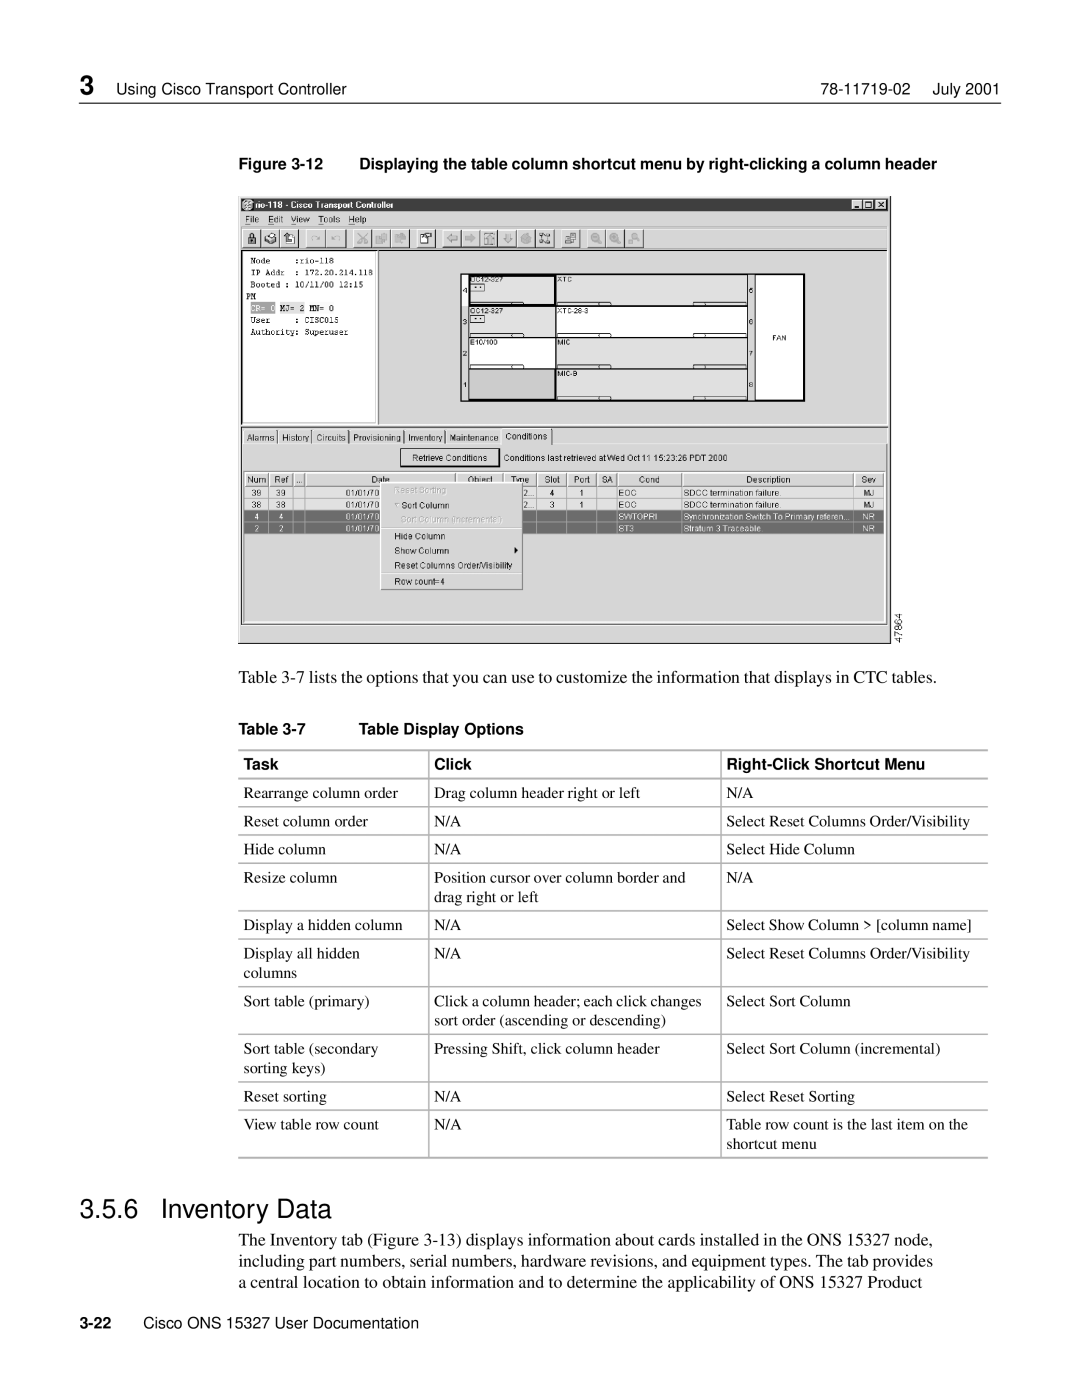 Cisco Systems manual Inventory Data, Cisco ONS 15327 User Documentation 